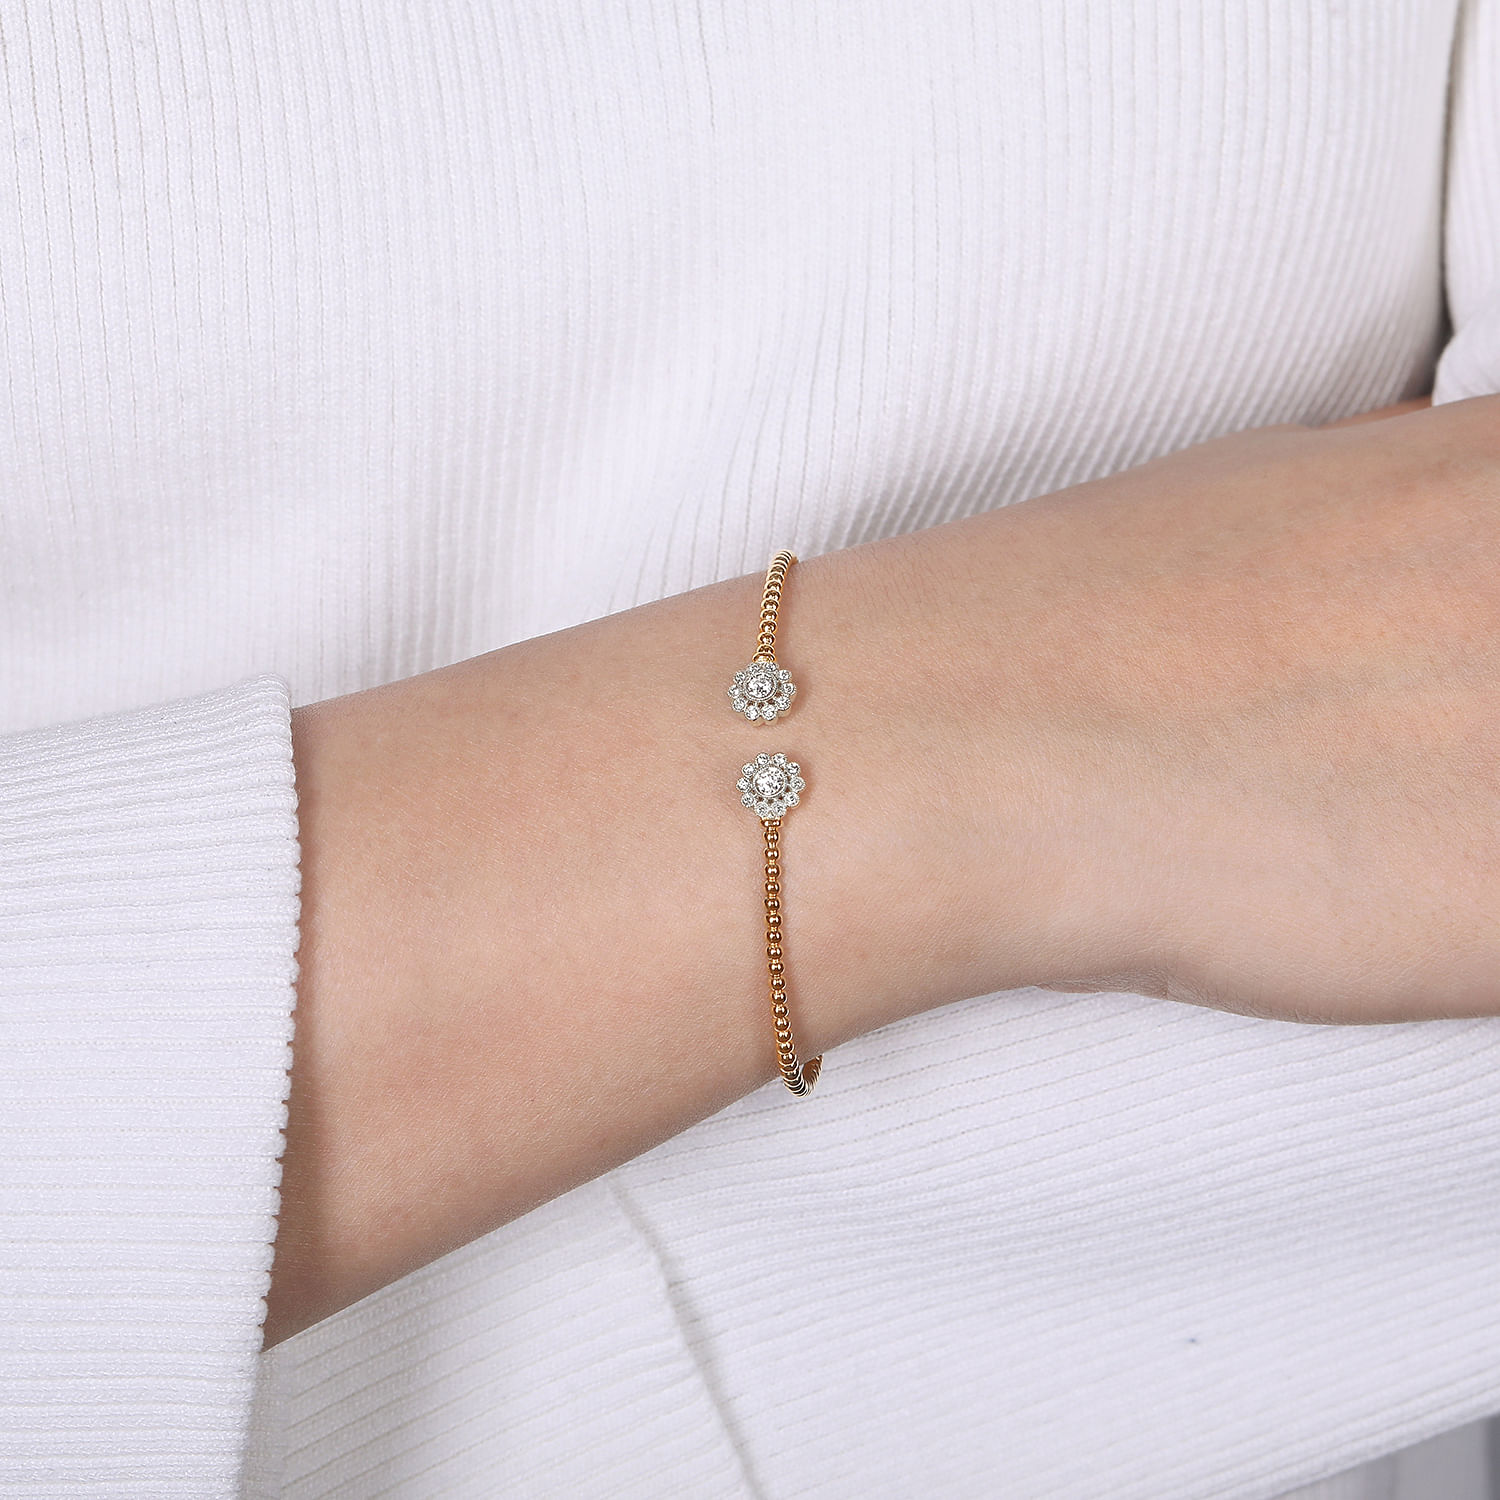 14K White&Rose Gold Bujukan Split Cuff Bracelet with Diamond Flowers